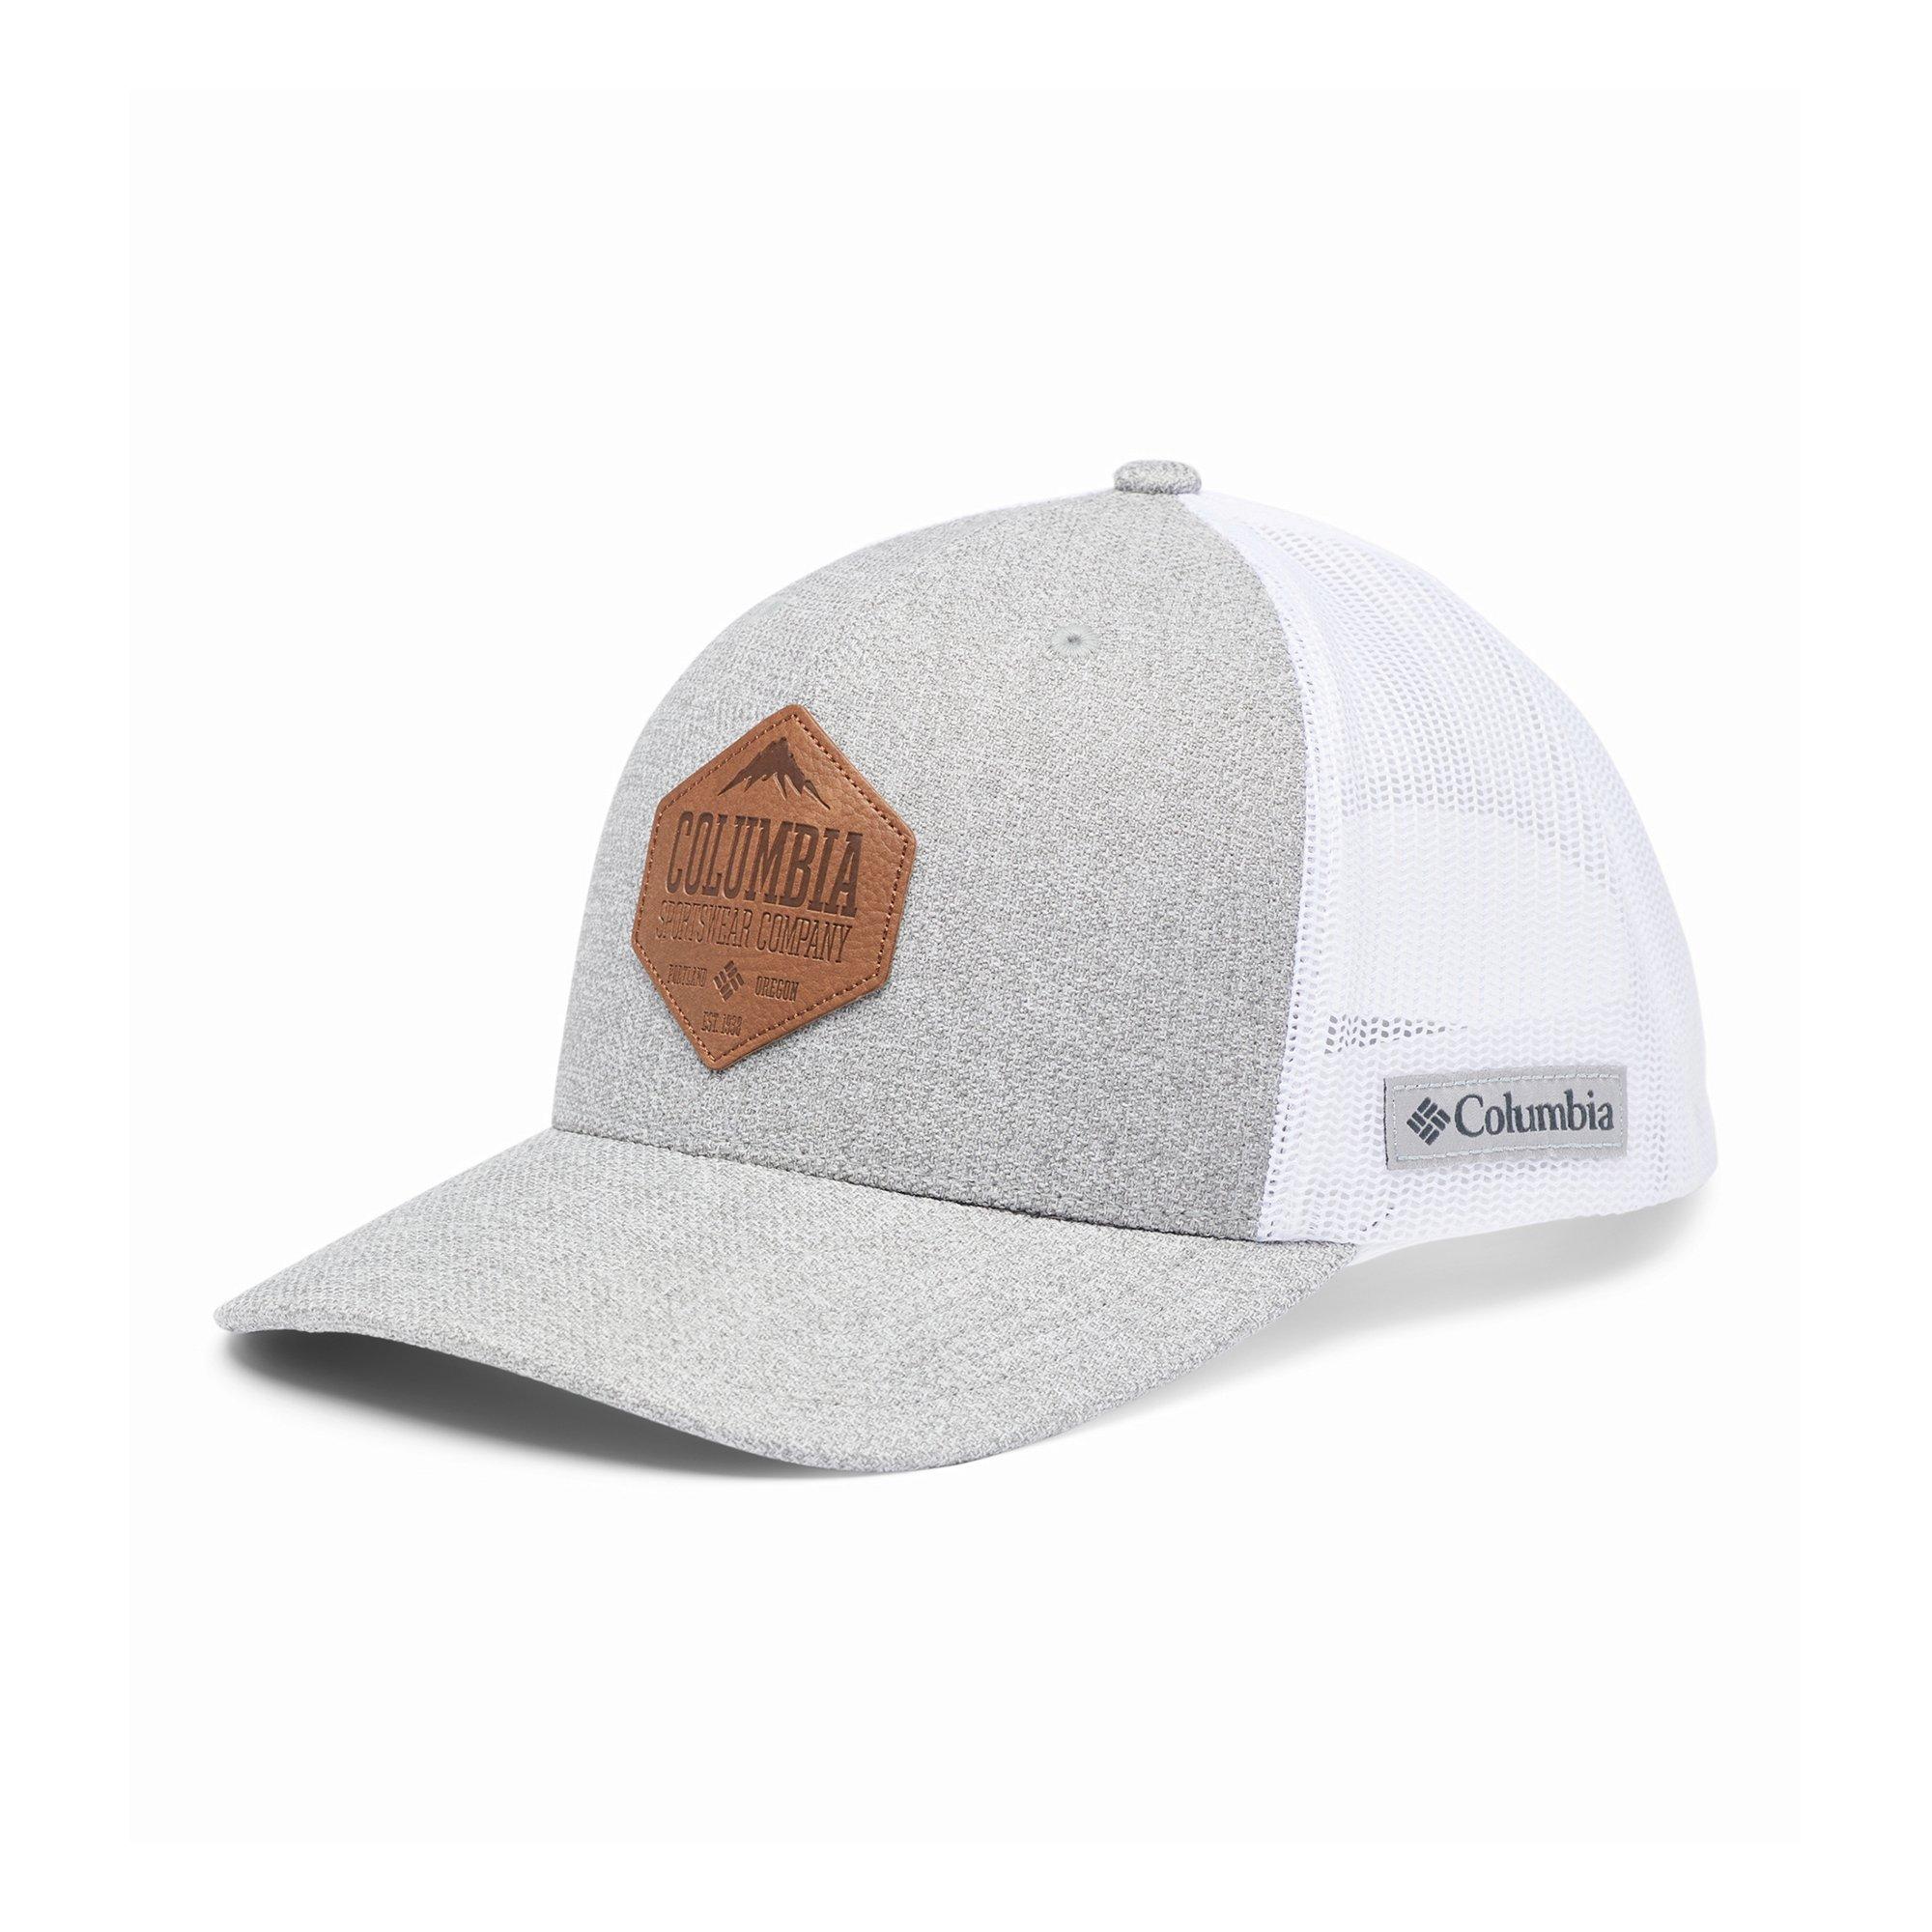 Fish Camp New Era Golf Trucker Hat Snapback Gray Fabric Front/Bill